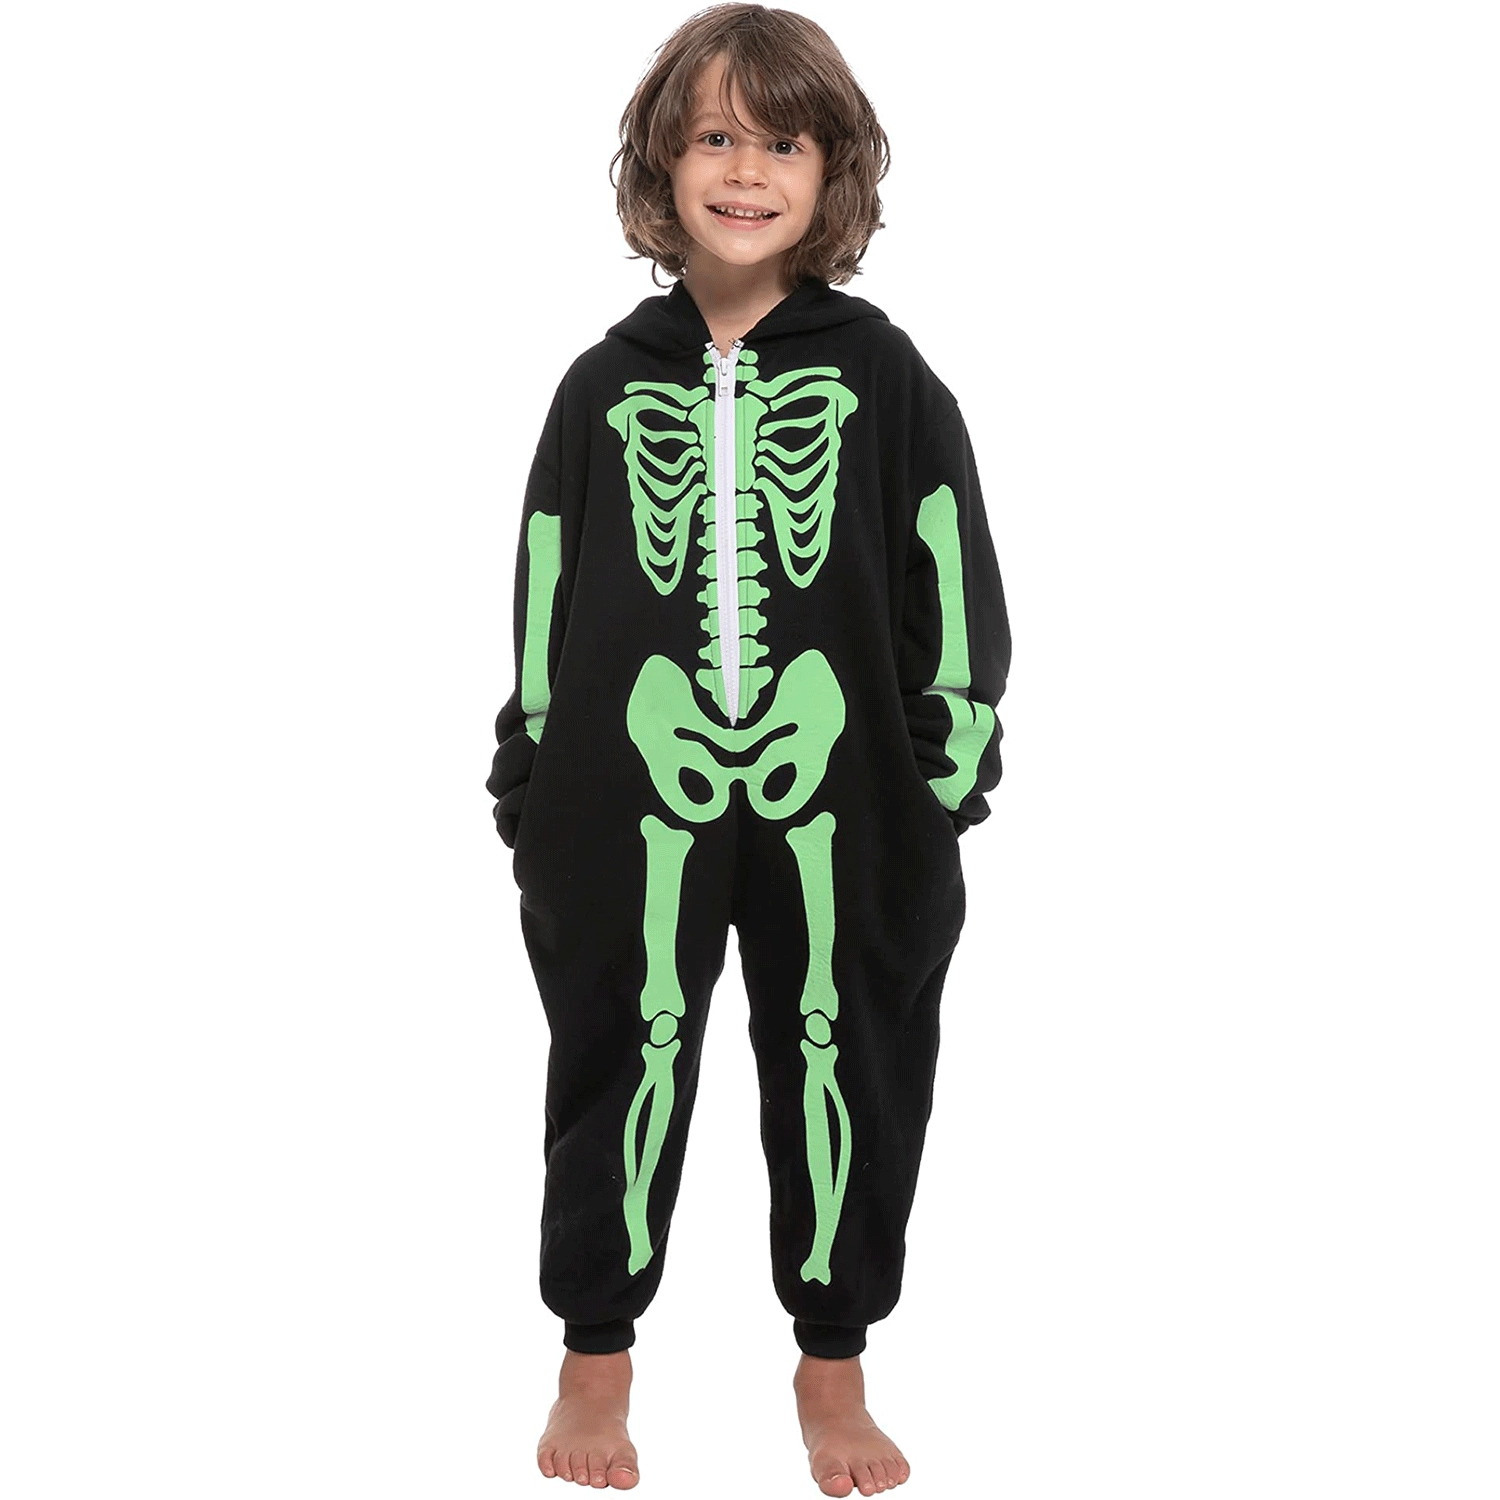 Glow in the dark skeleton pajamas kid